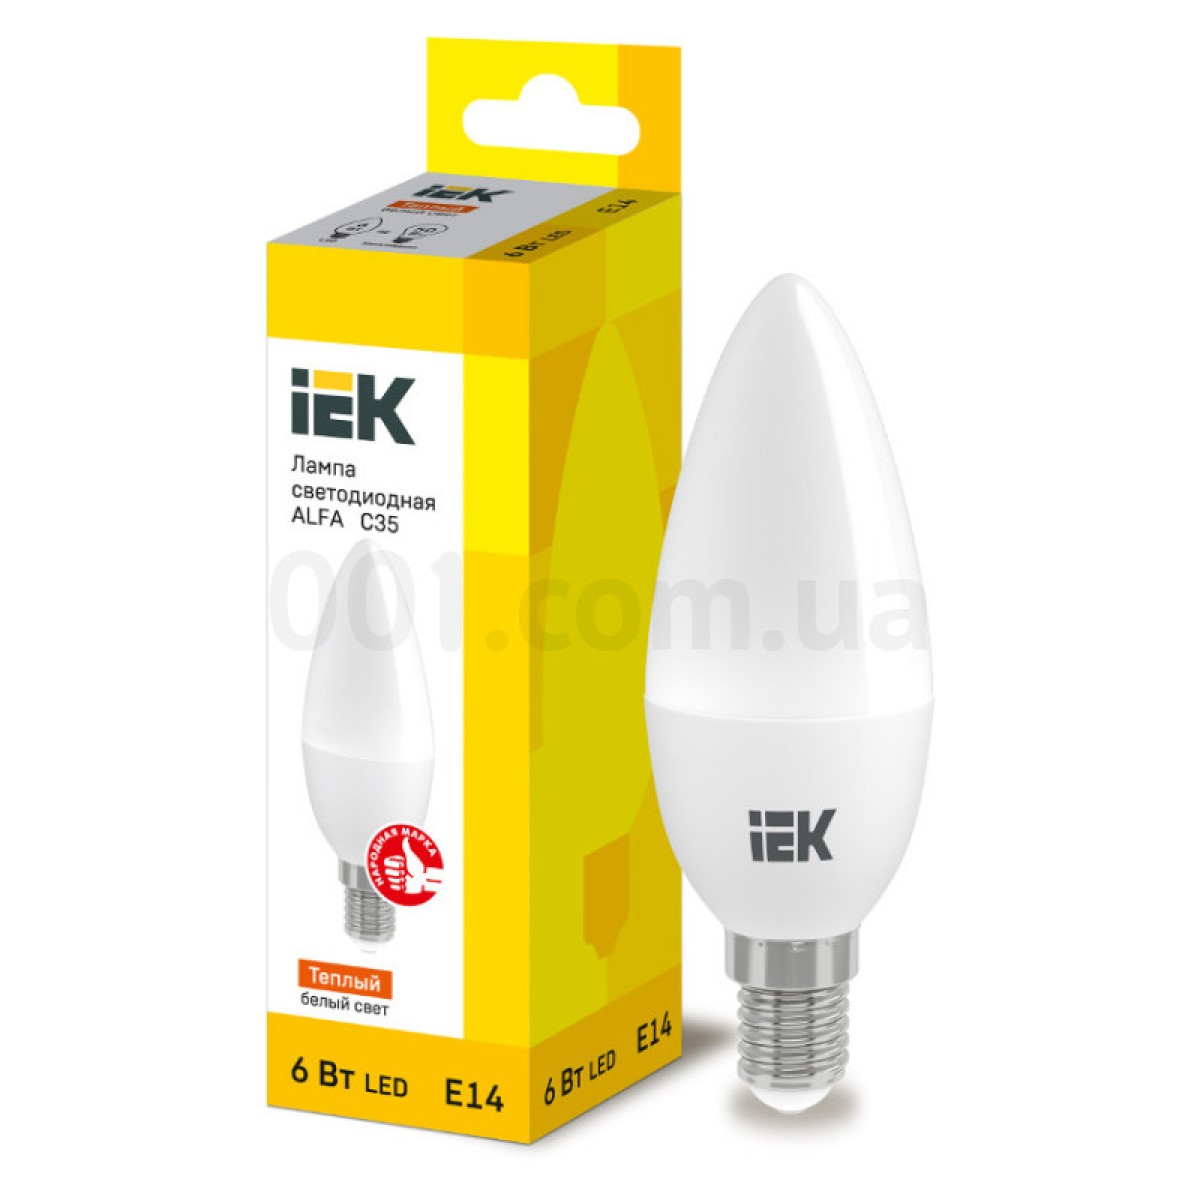 Светодиодная лампа LED ALFA C35 (свеча) 6 Вт 230В 3000К E14, IEK 256_256.jpg